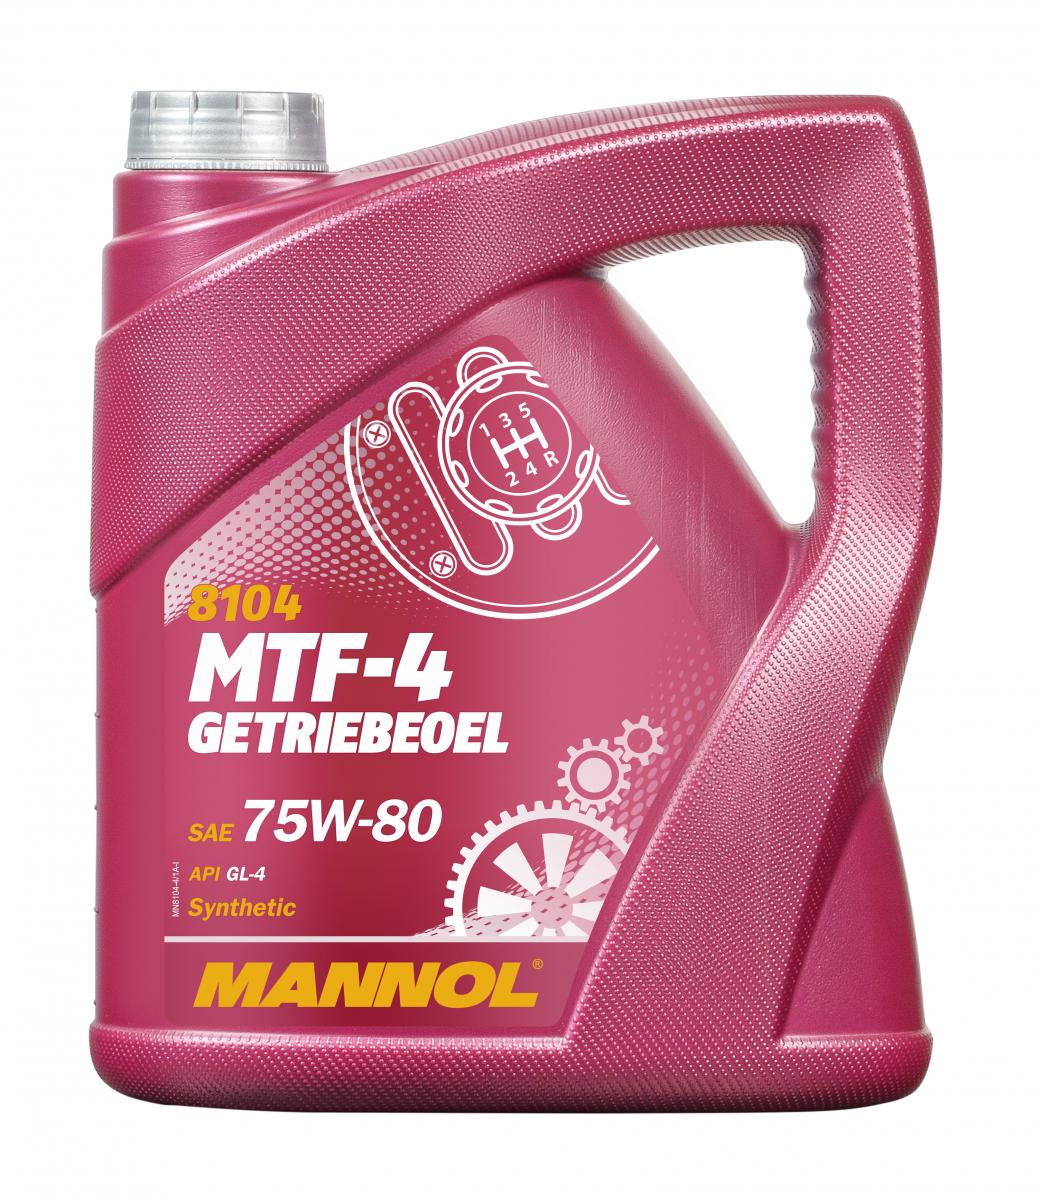 4 Liter MANNOL MTF-4 Getriebeöl API GL-4 75W-80 Getriebe Öl 75W80